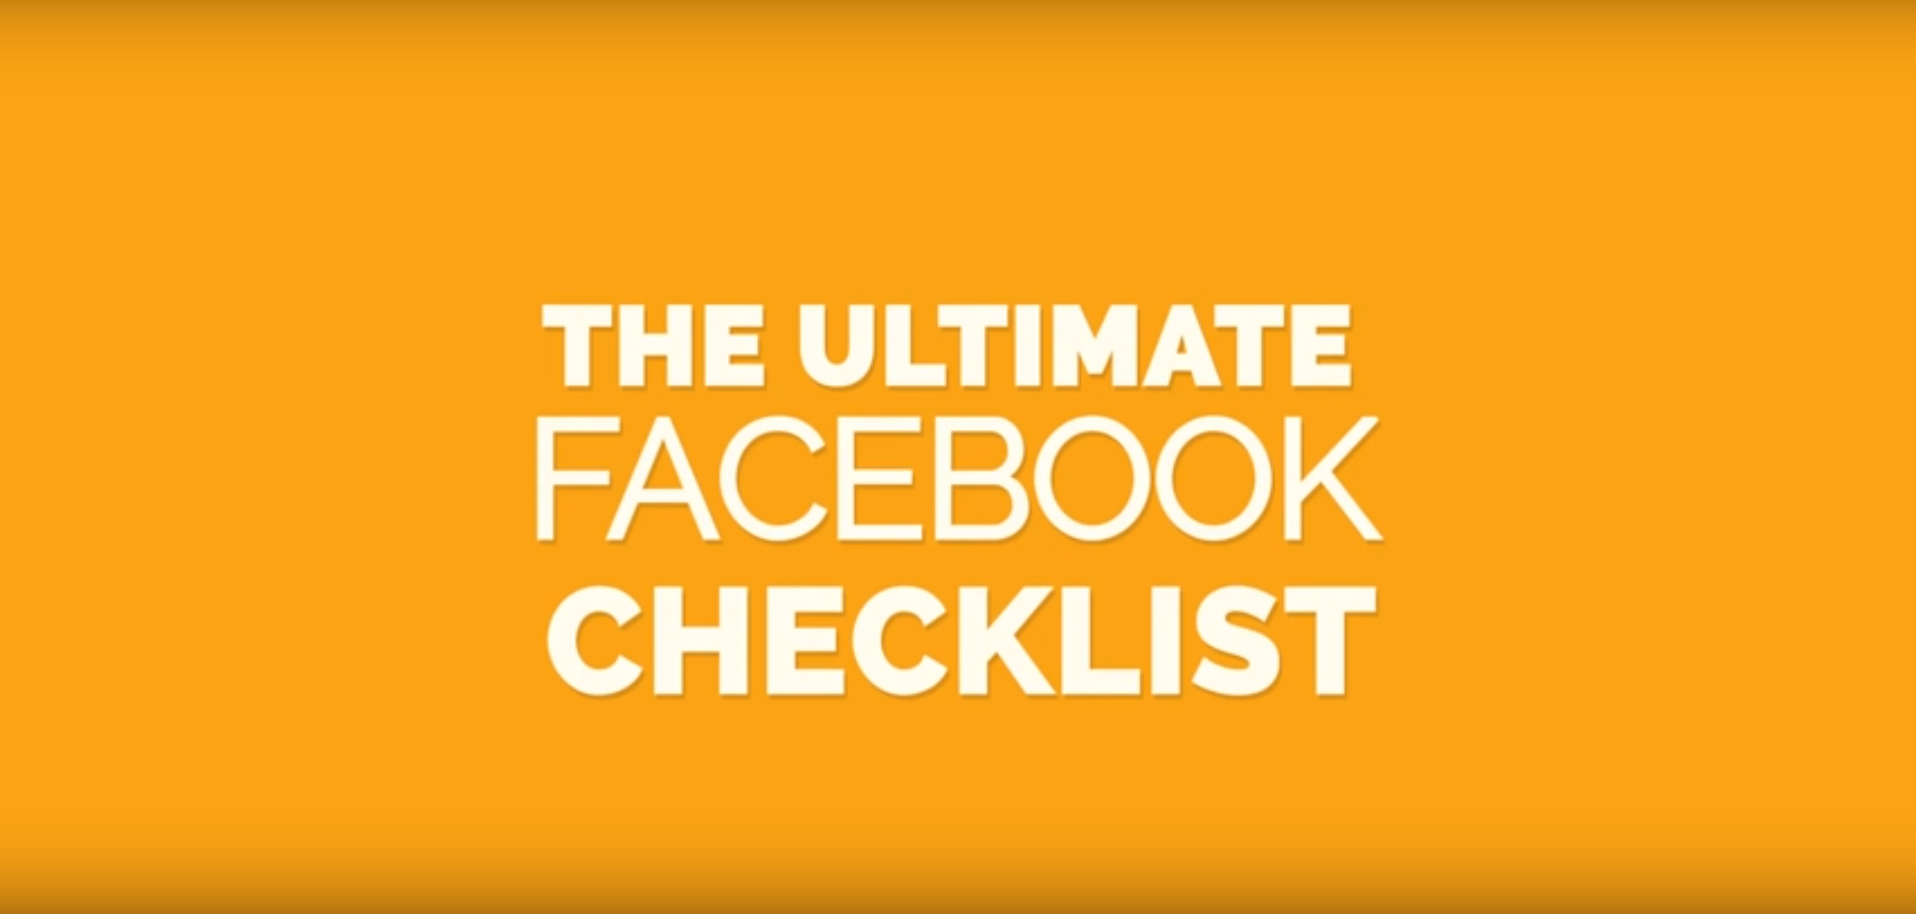 The ultimate Facebook Checklist